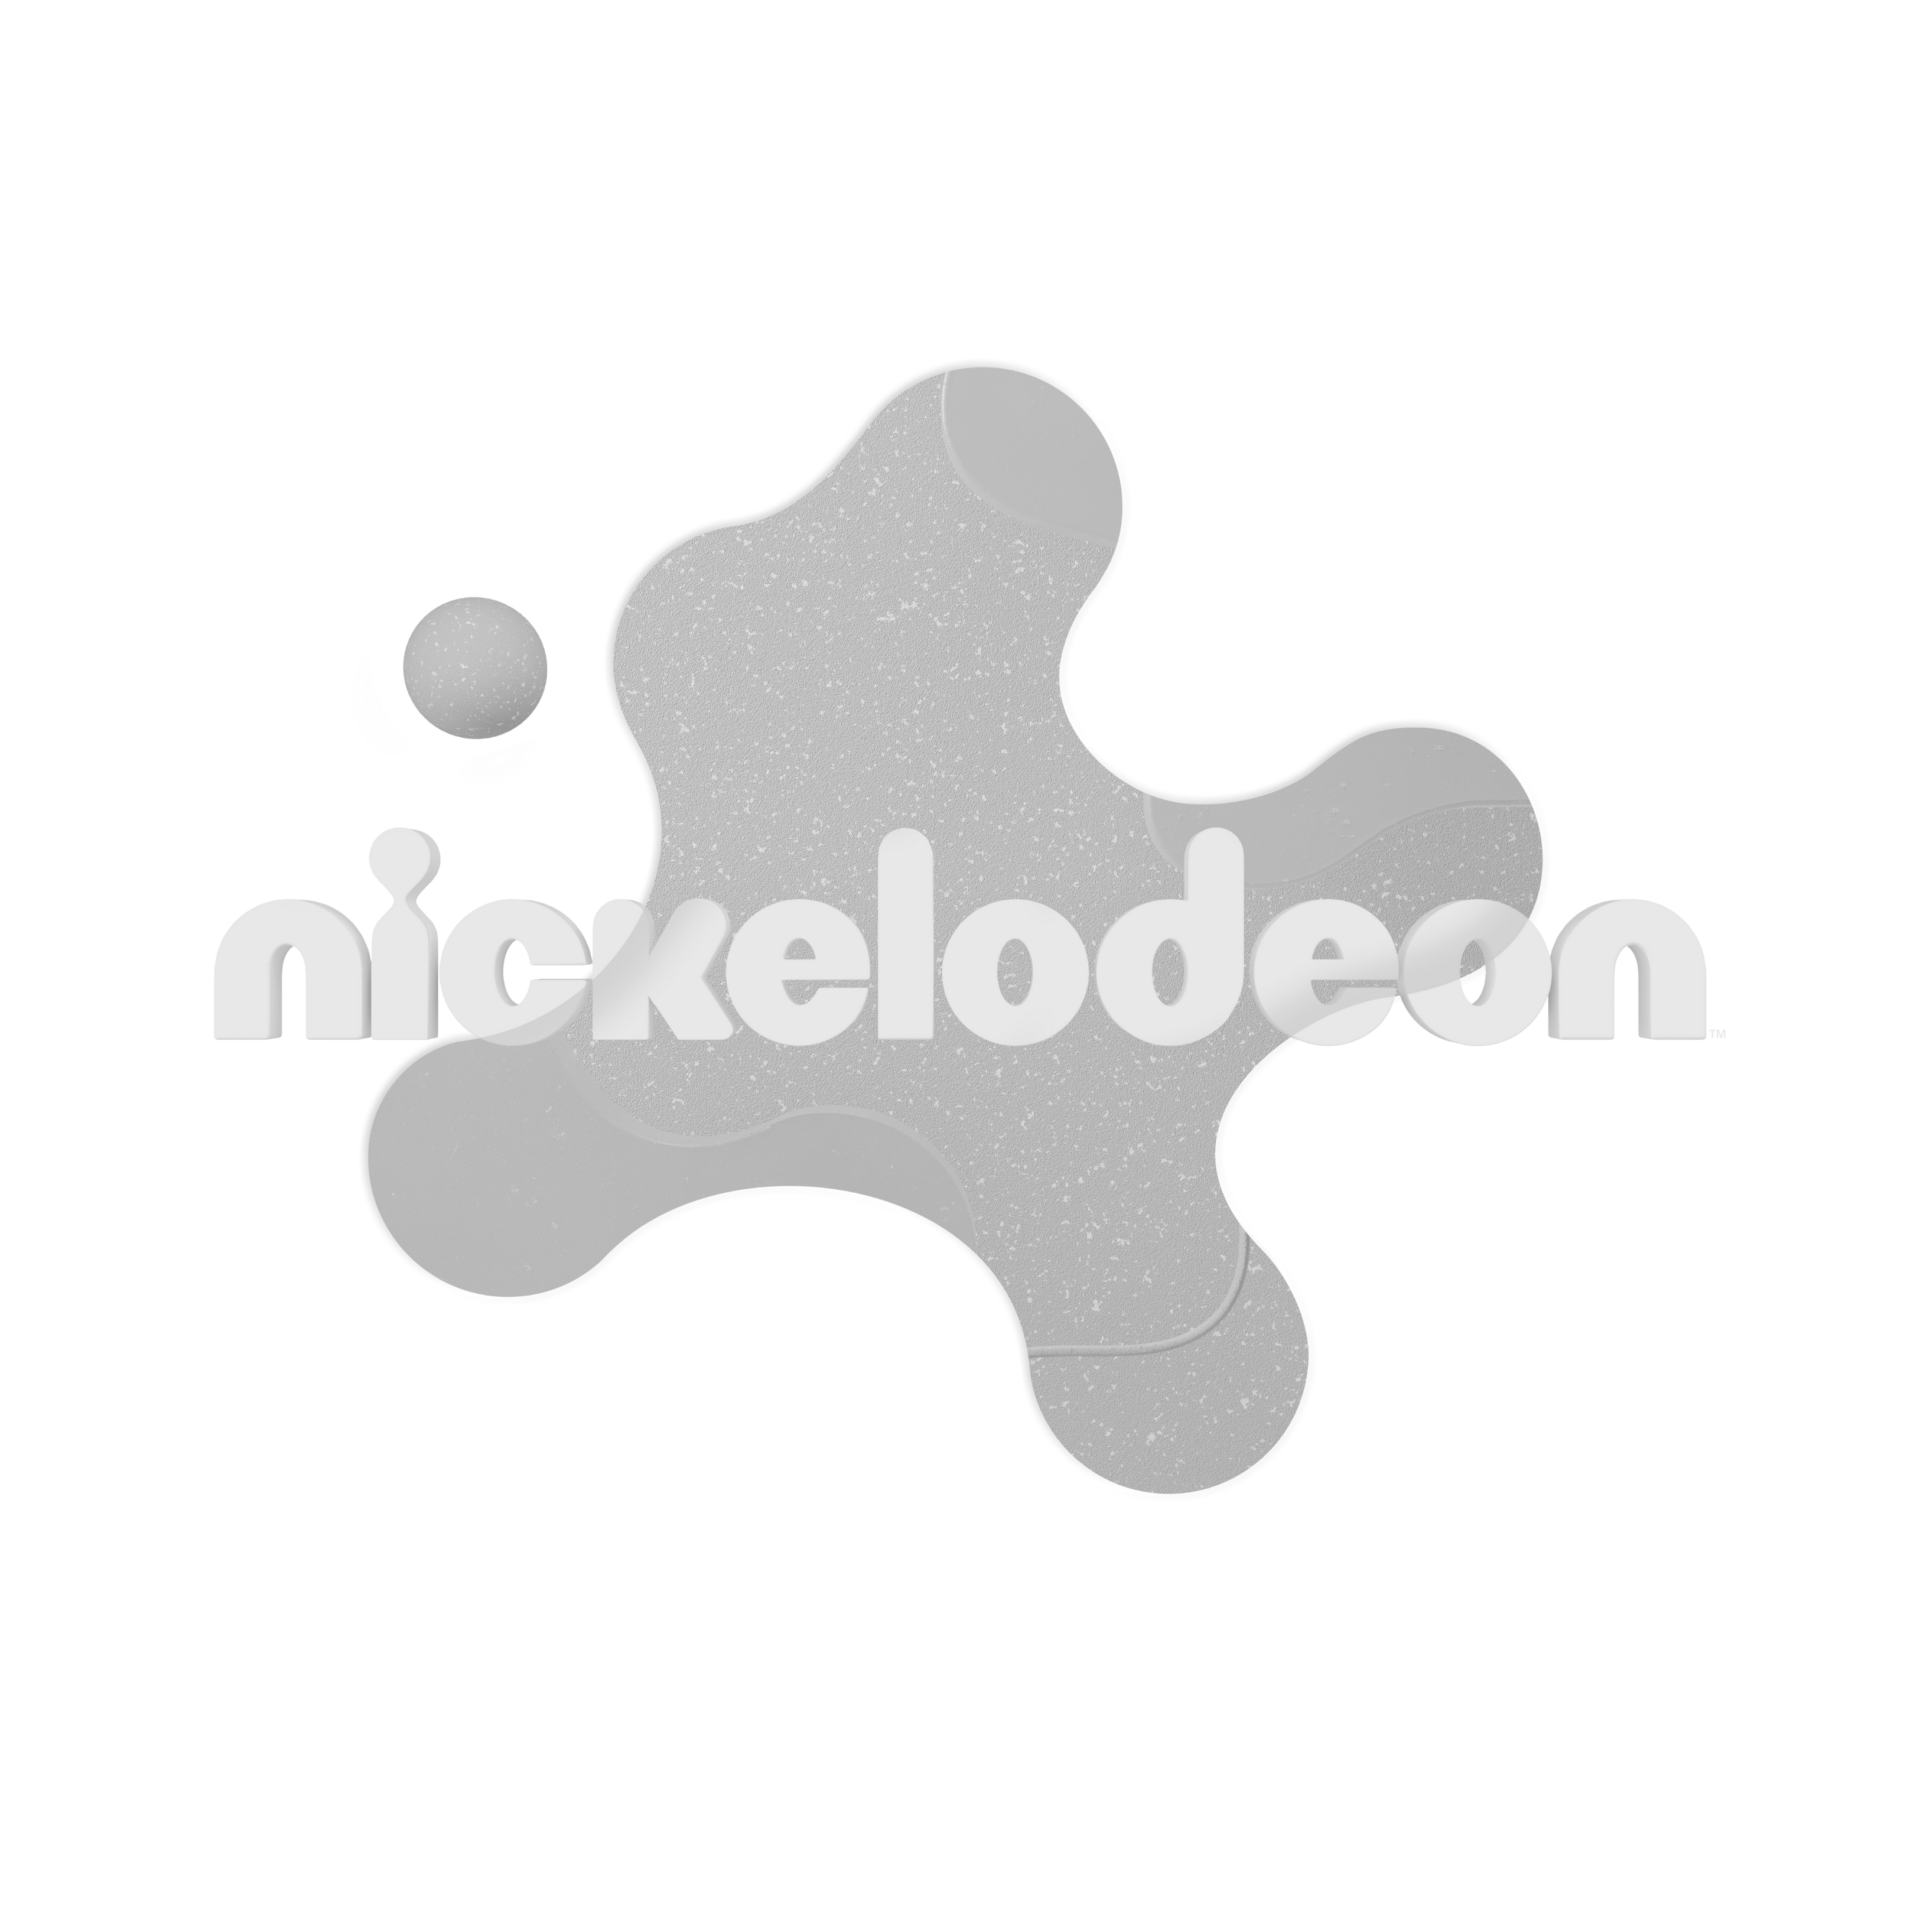 Transfer Media Nickelodeon logo B/W